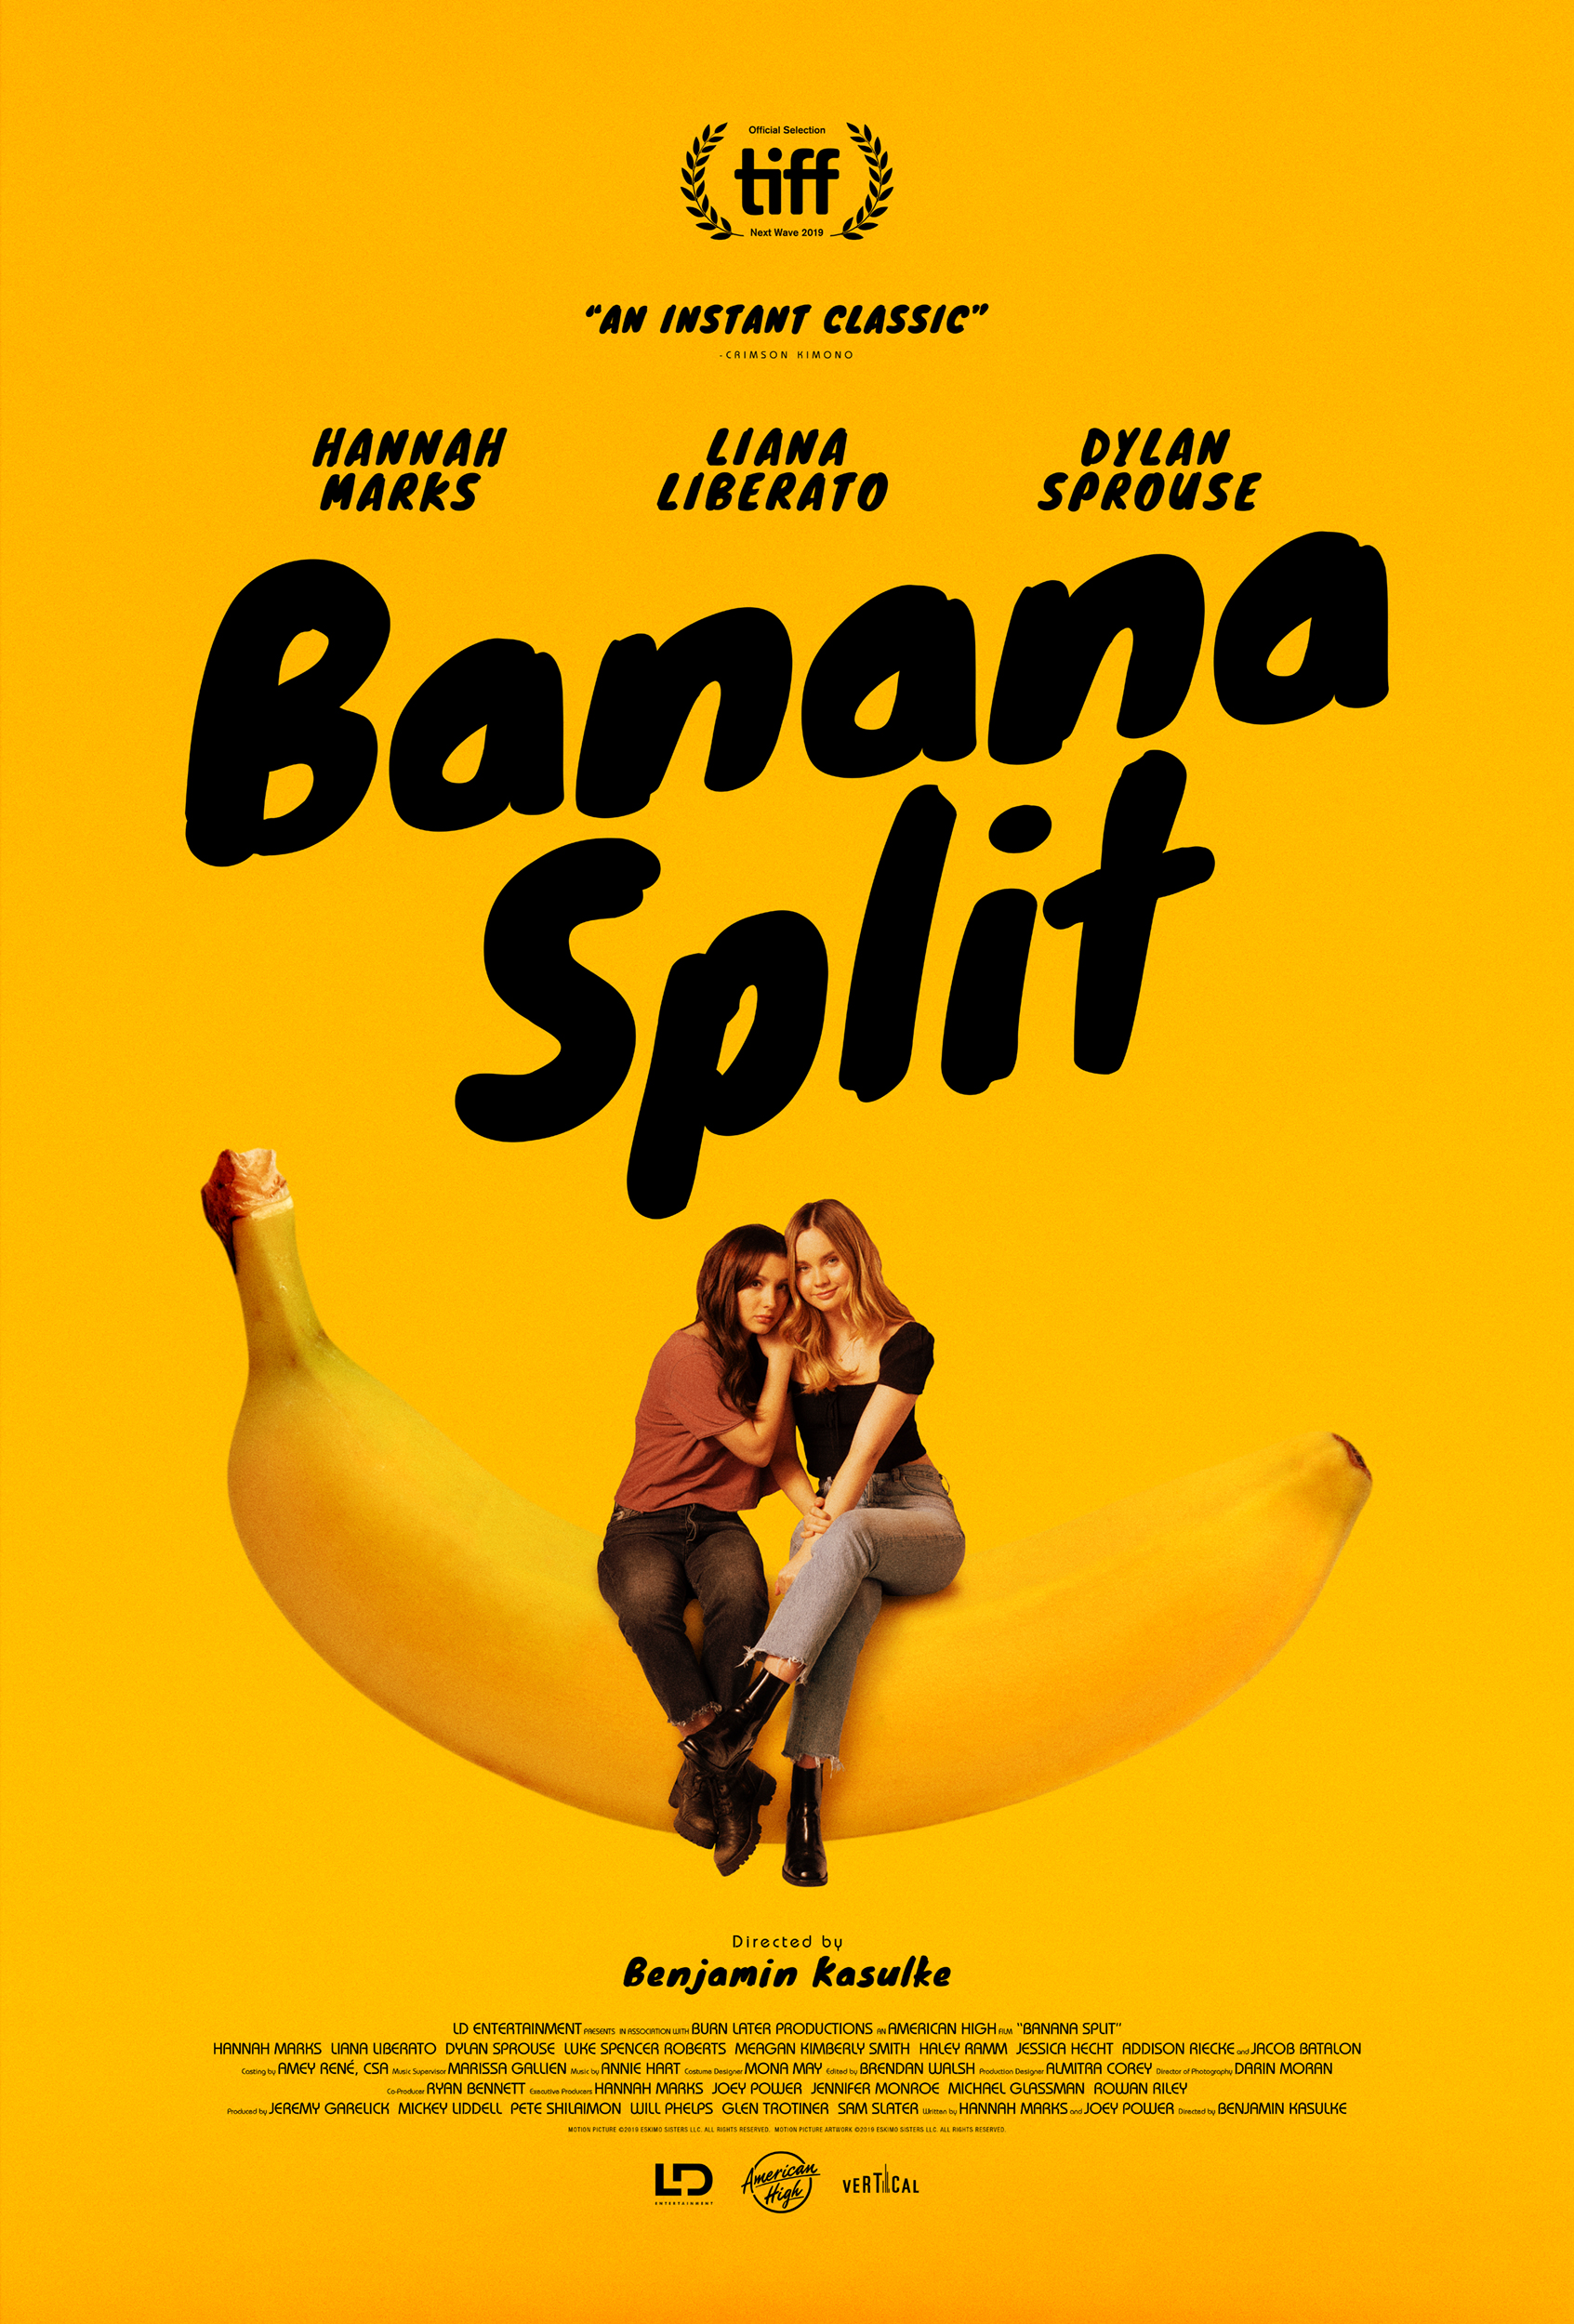 Banana Split (2018) แอบแฟนมาซี้ปึ้ก